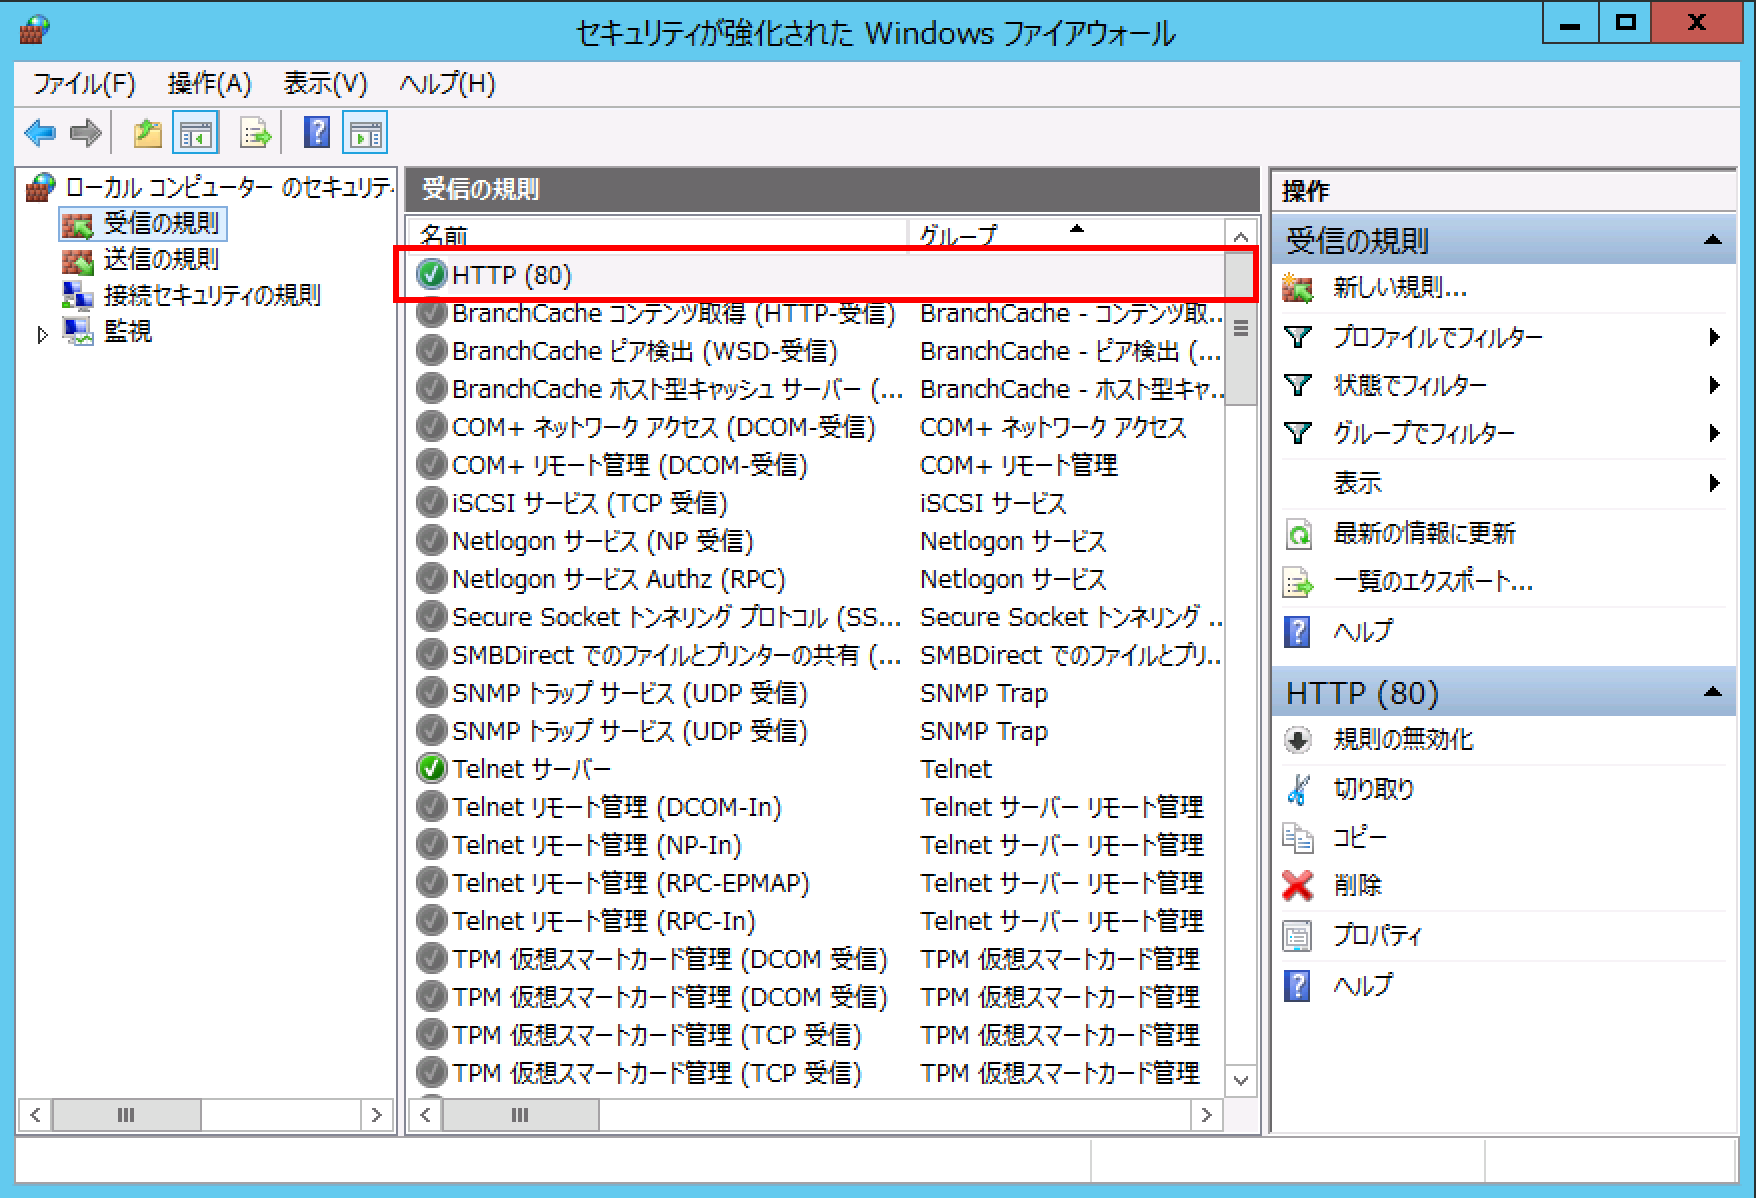 WindowsFirewall_NewRuleAdded